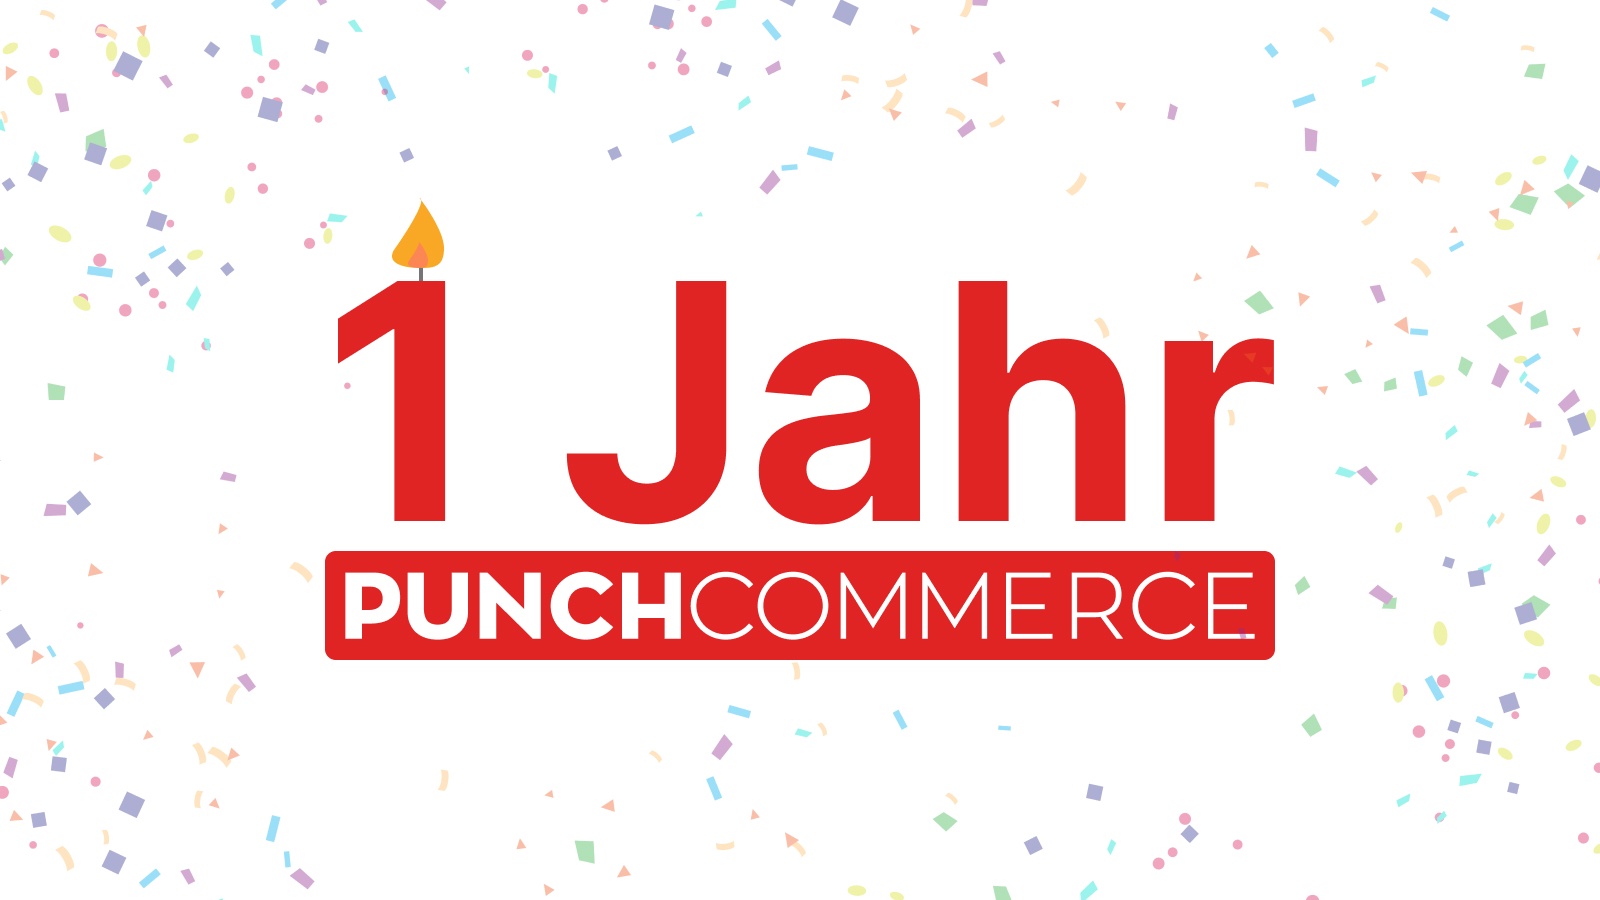 PunchCommerce feiert Geburtstag